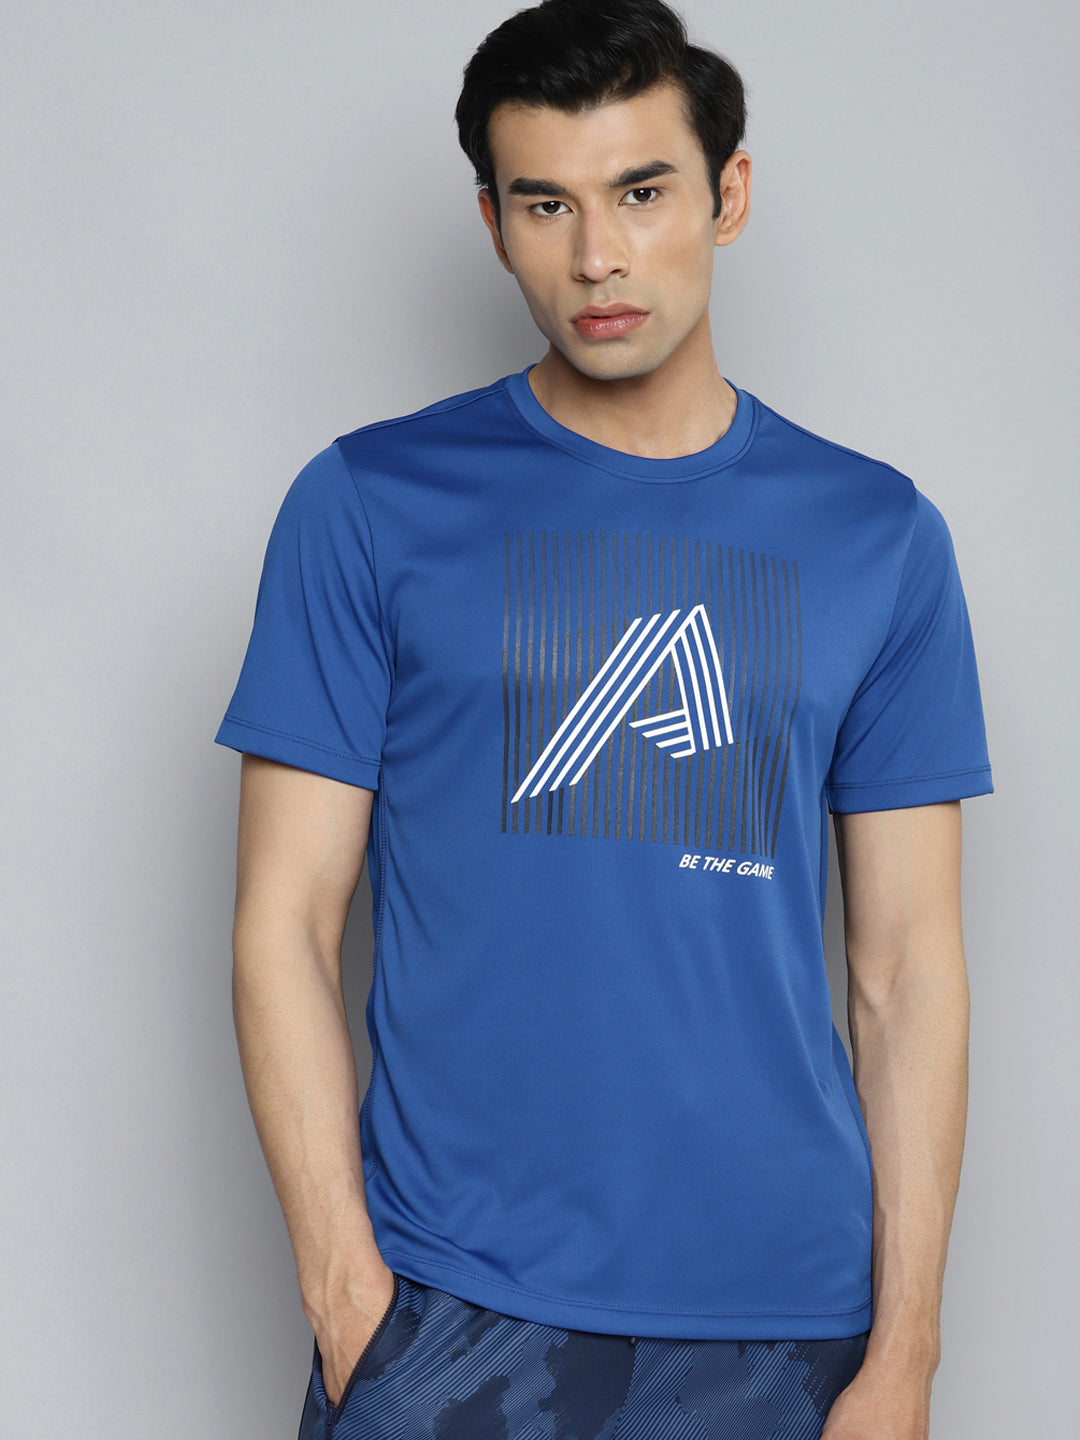 Alcis Men Blue Typography Printed Slim Fit Training or Gym T-shirt